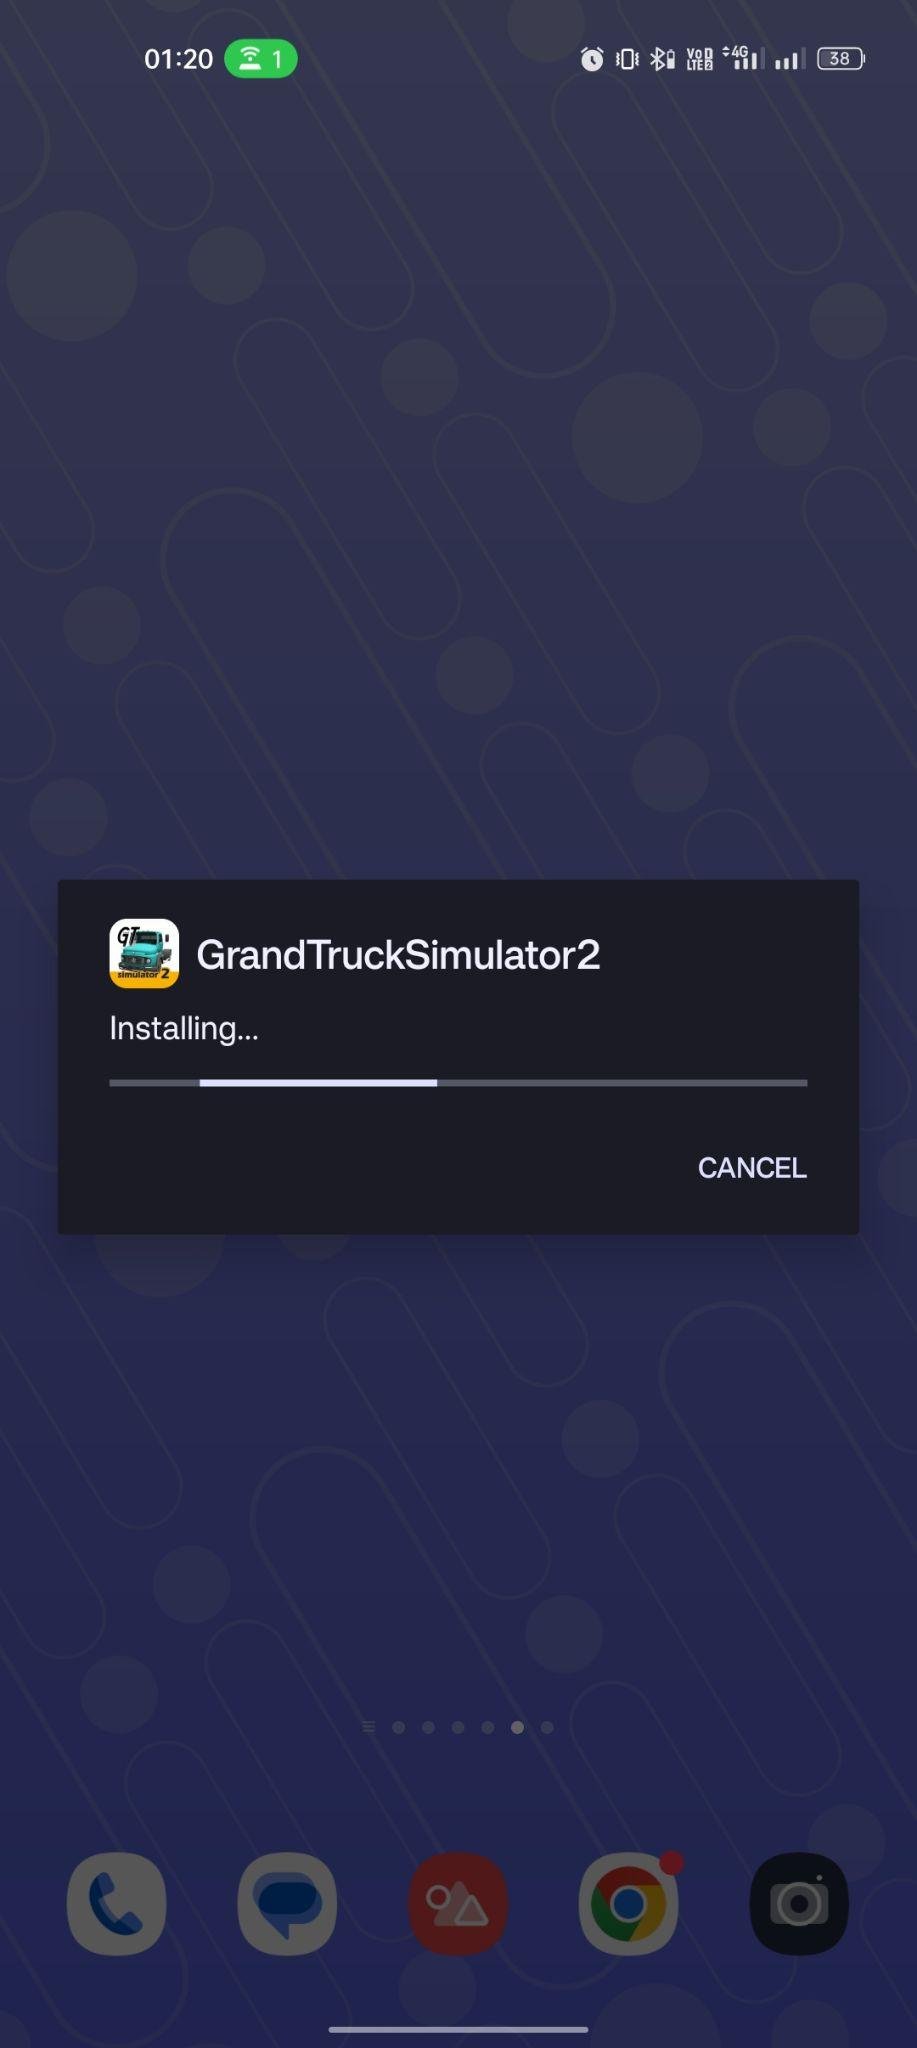 Grand Truck Simulator 2 apk installing